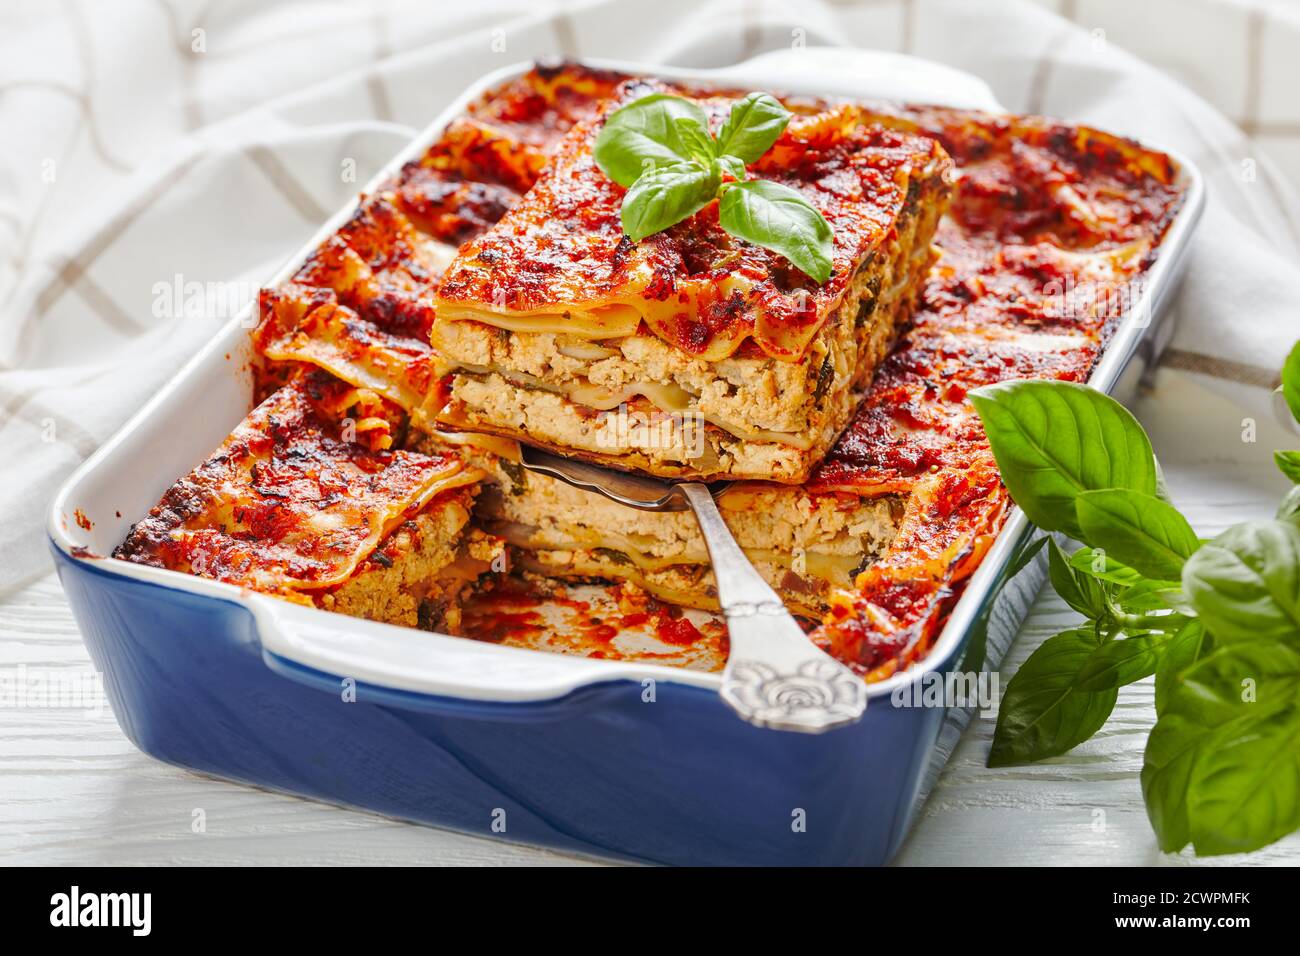 Healthy meatless dairy-free vegan tofu lasagna with champignon mushrooms, tomato sauce, Italian seasoning, served on a baking dish with fresh herbs on Stock Photo